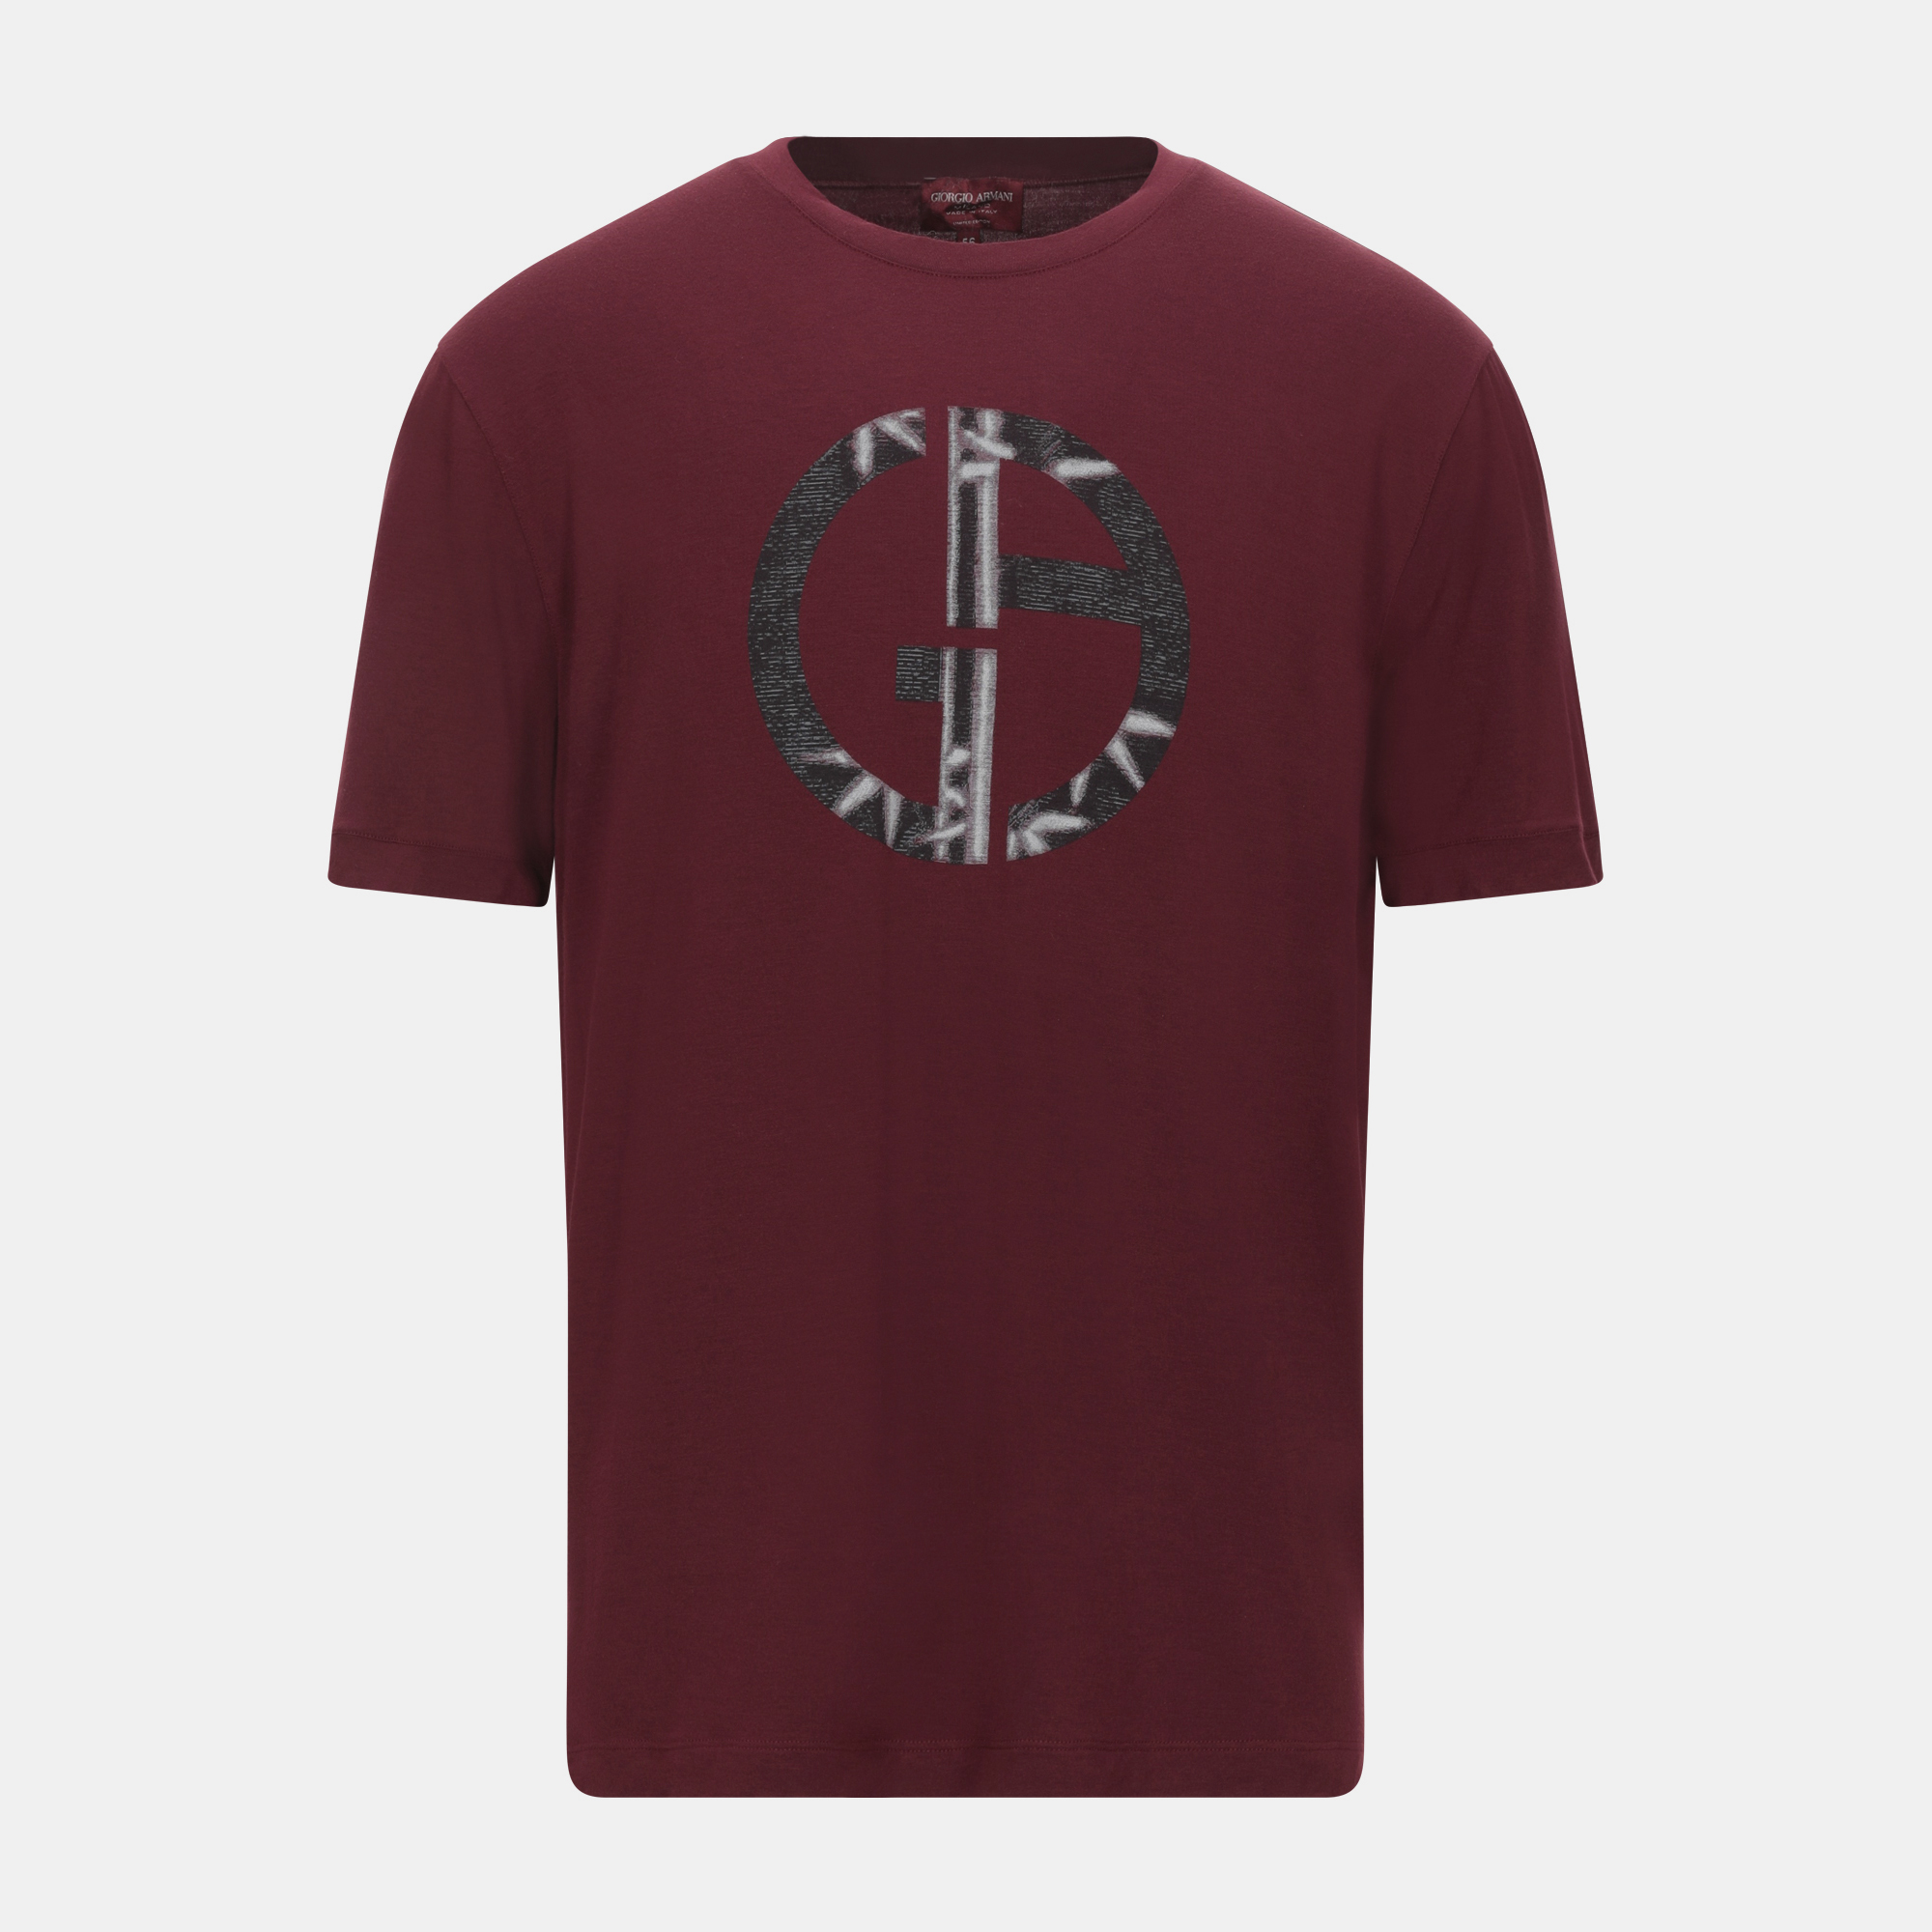 Giorgio armani maroon logo print jersey t-shirt xxl (it 54)